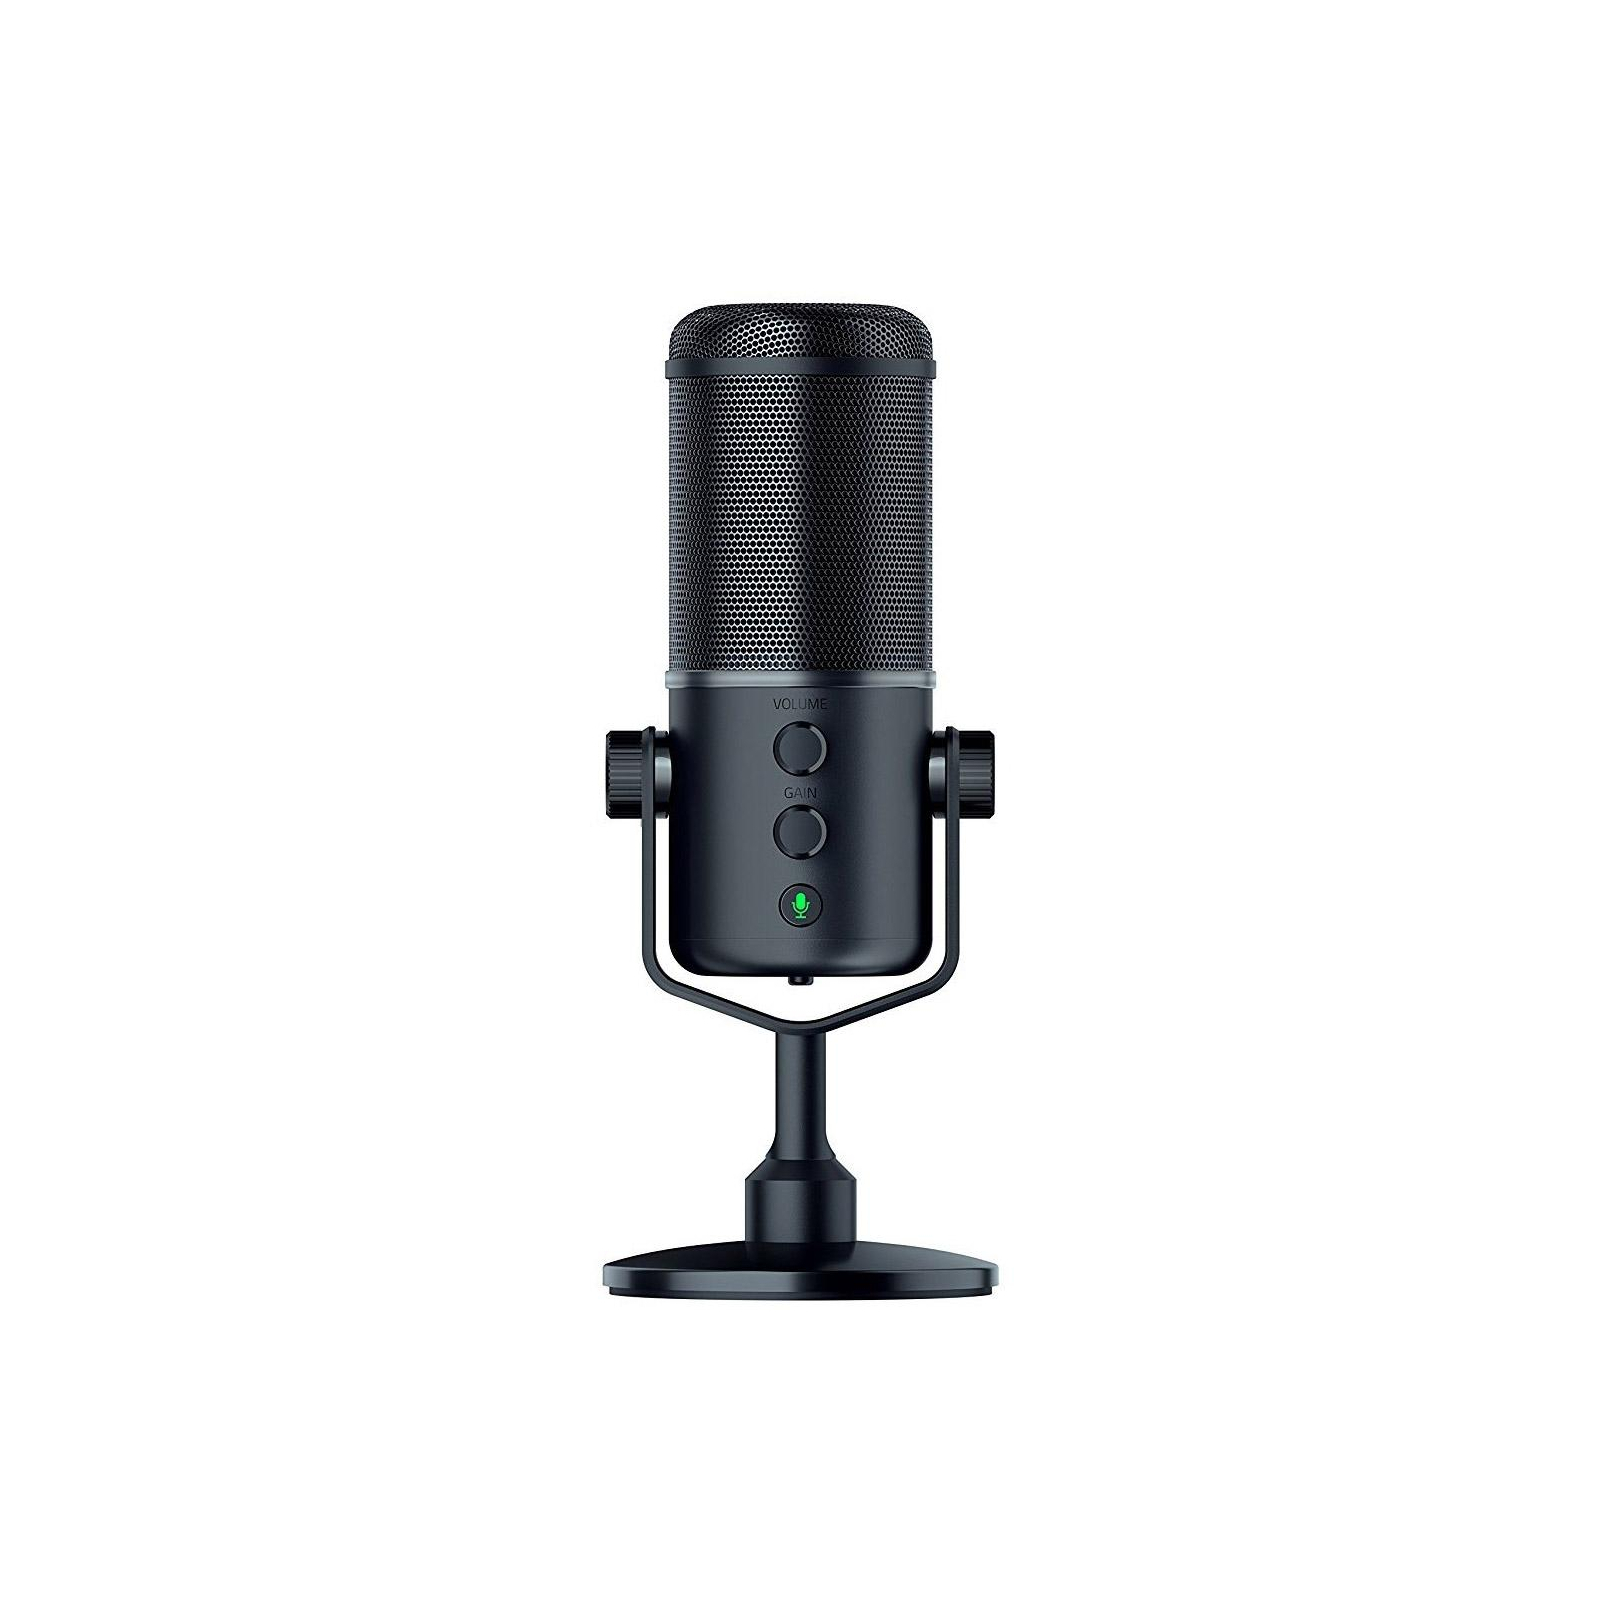 Микрофон Razer Seiren Elite (RZ19-02280100-R3M1) изображение 3